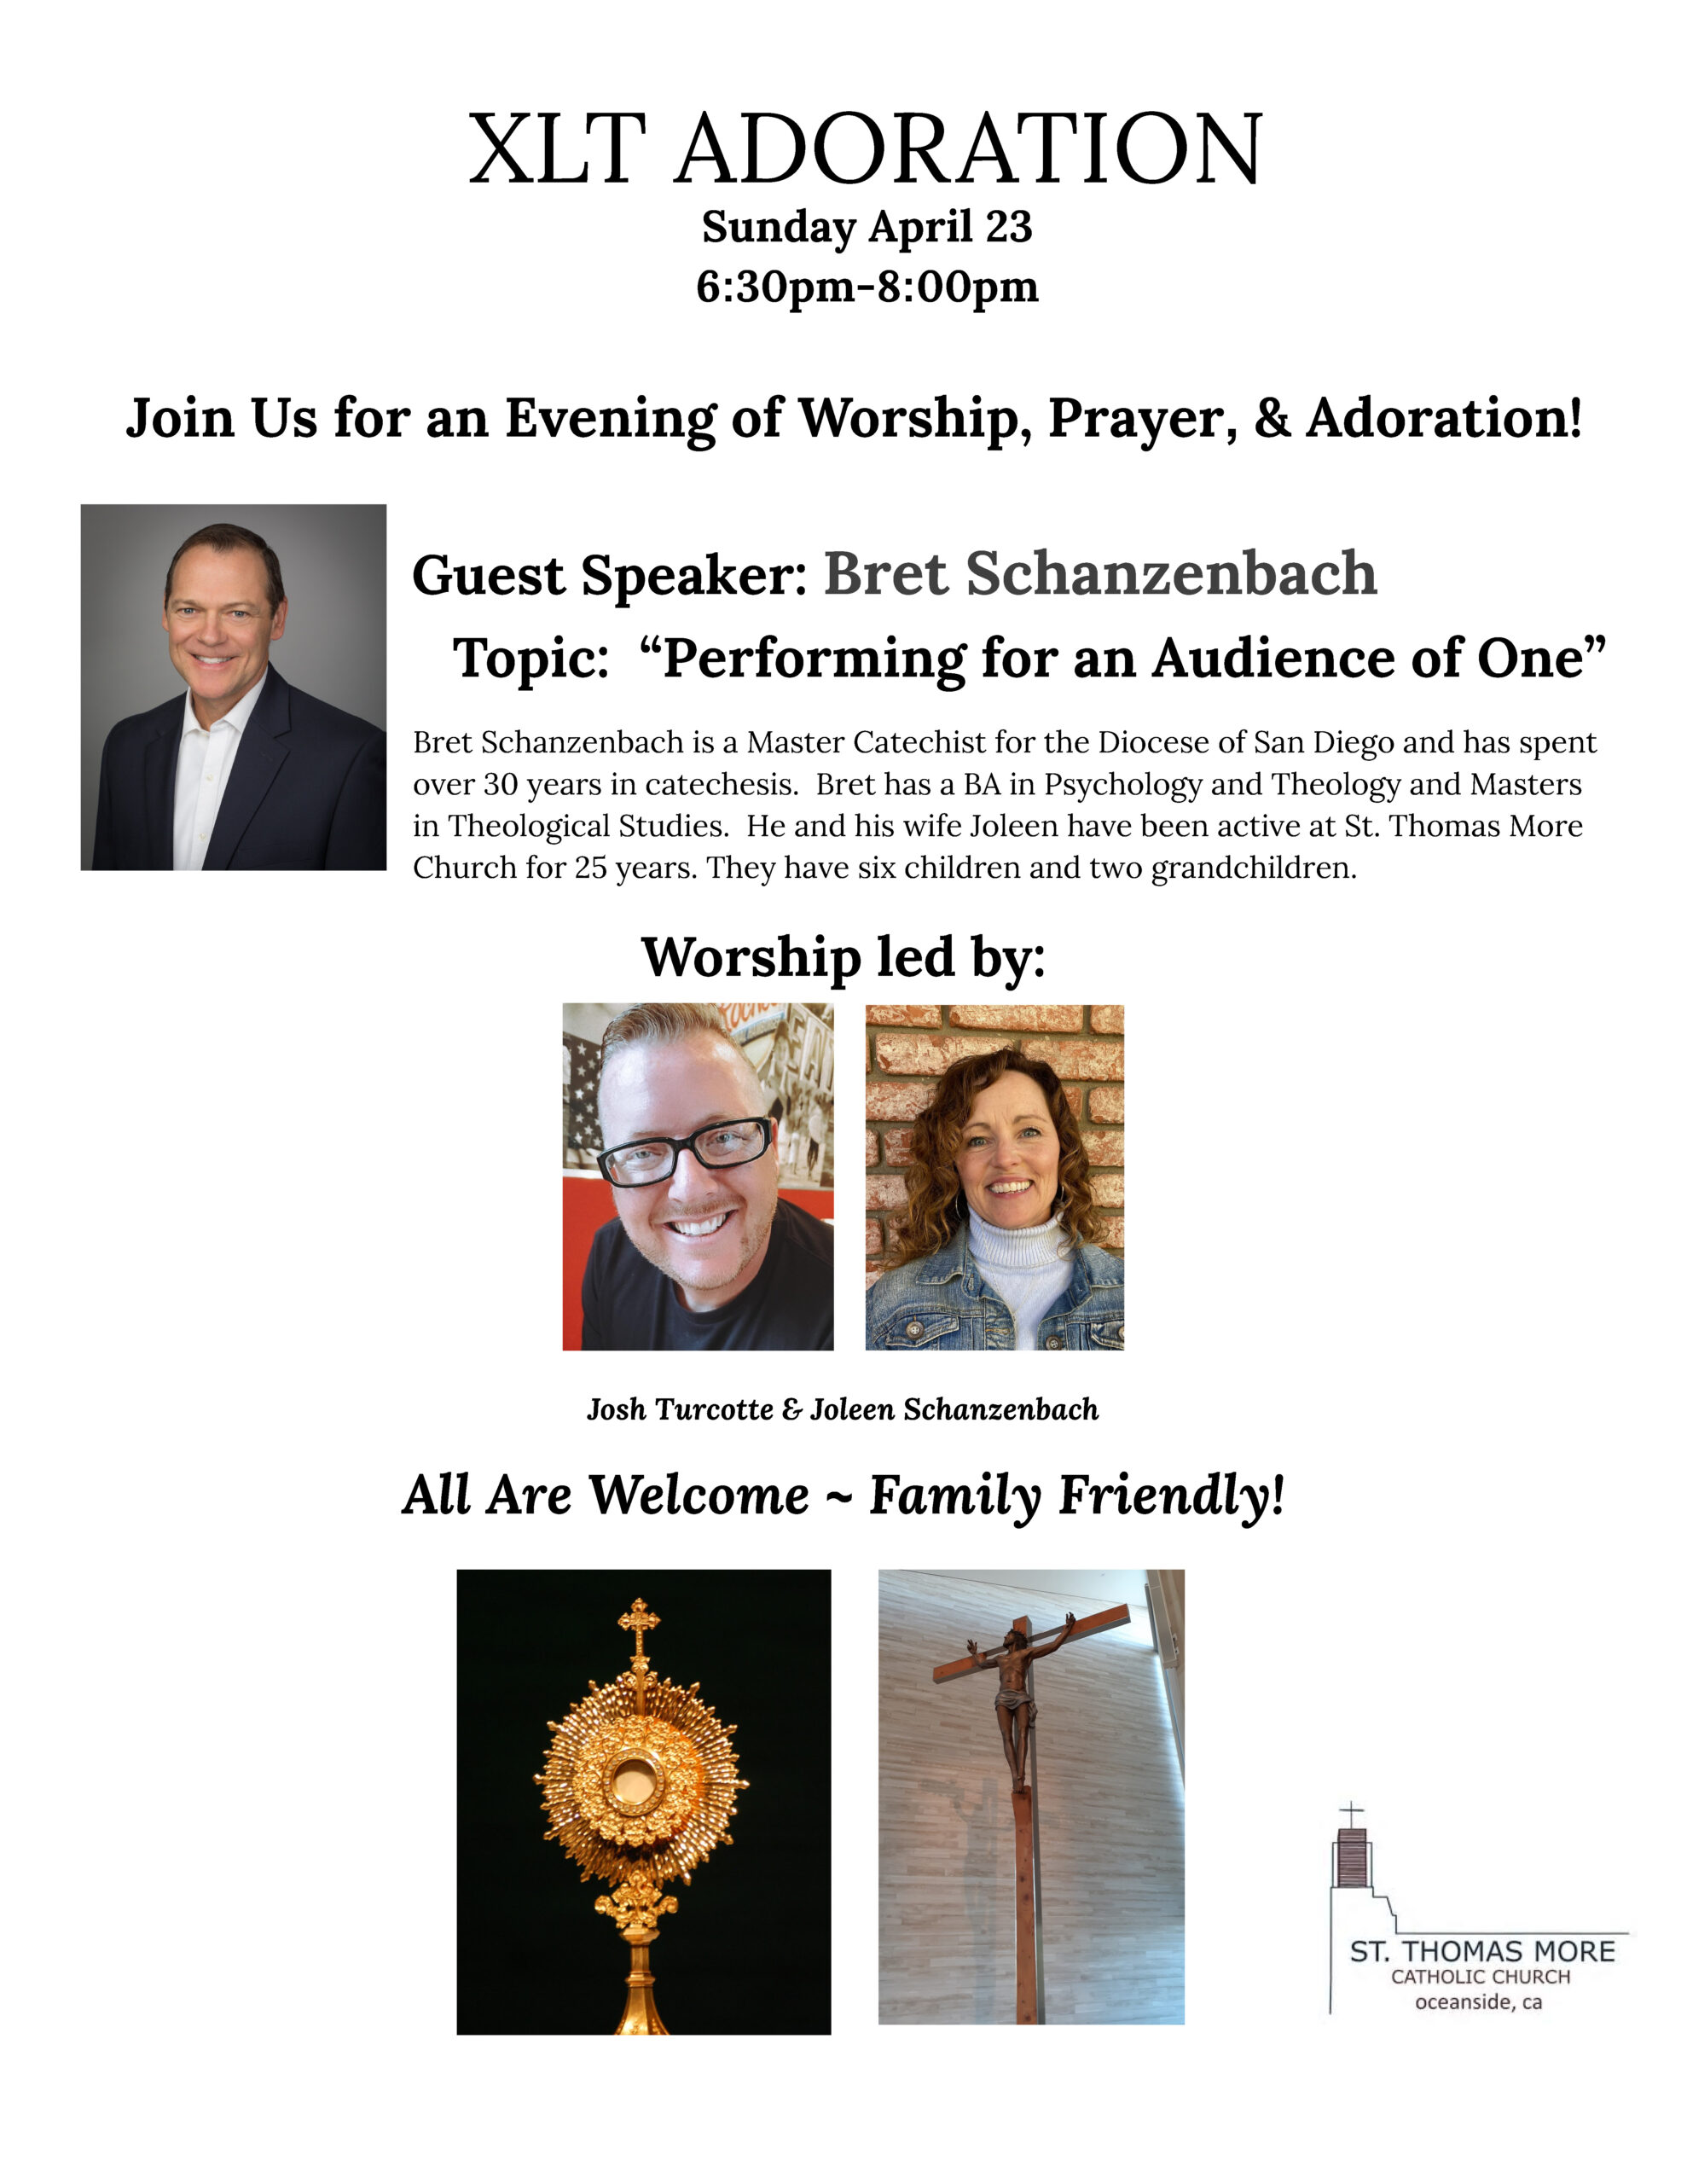 XLT Evening of Worship, Prayer, & Adoration